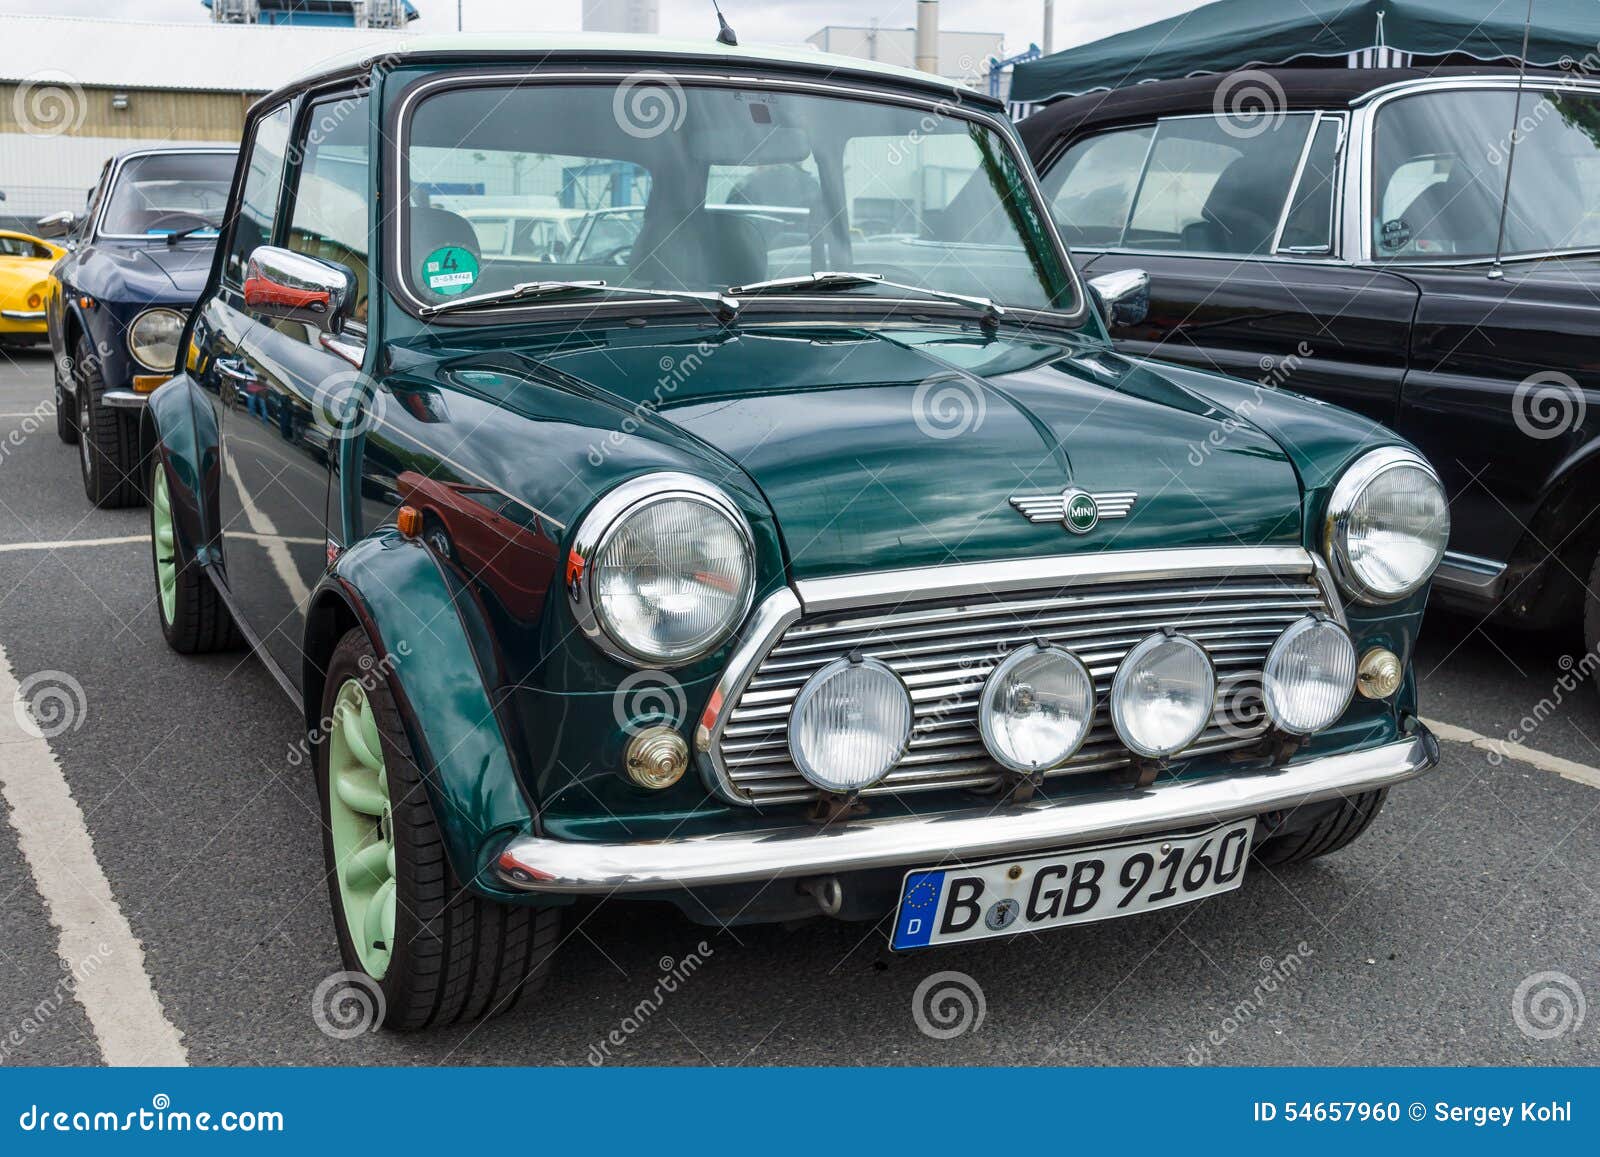 Small economy car Mini. editorial image. Image of mini - 54657960